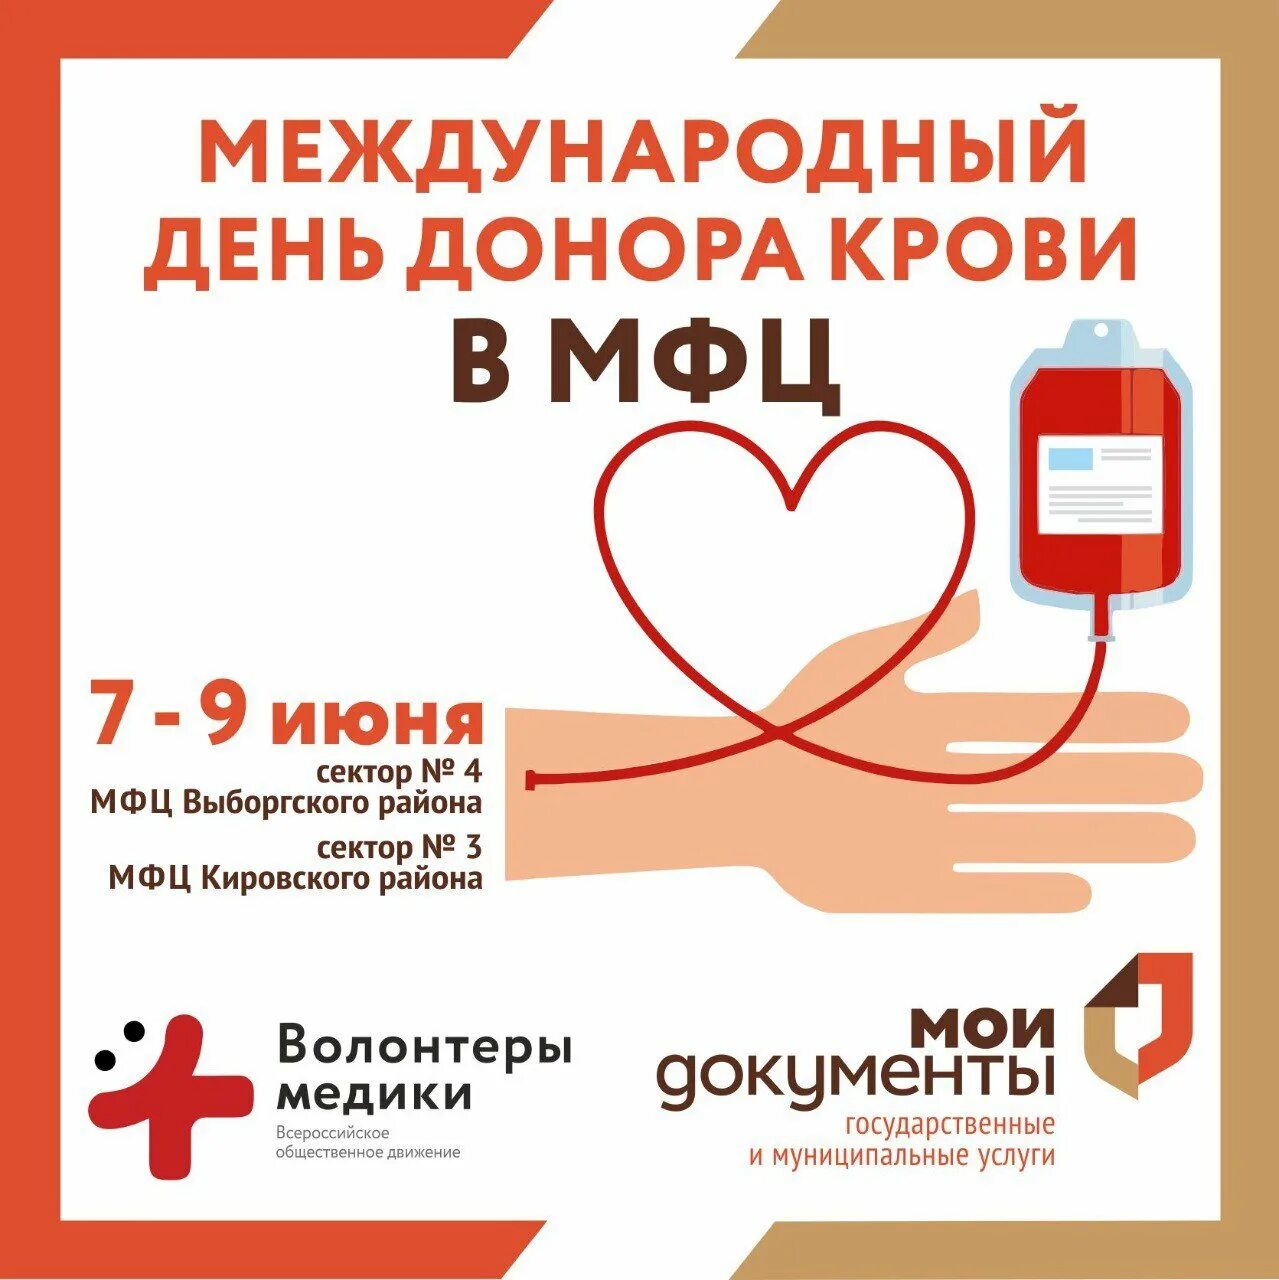 Донорство петербург. День донора. Всемирный день донора крови. Международныхдень донора. 14 Июня Всемирный день донора.